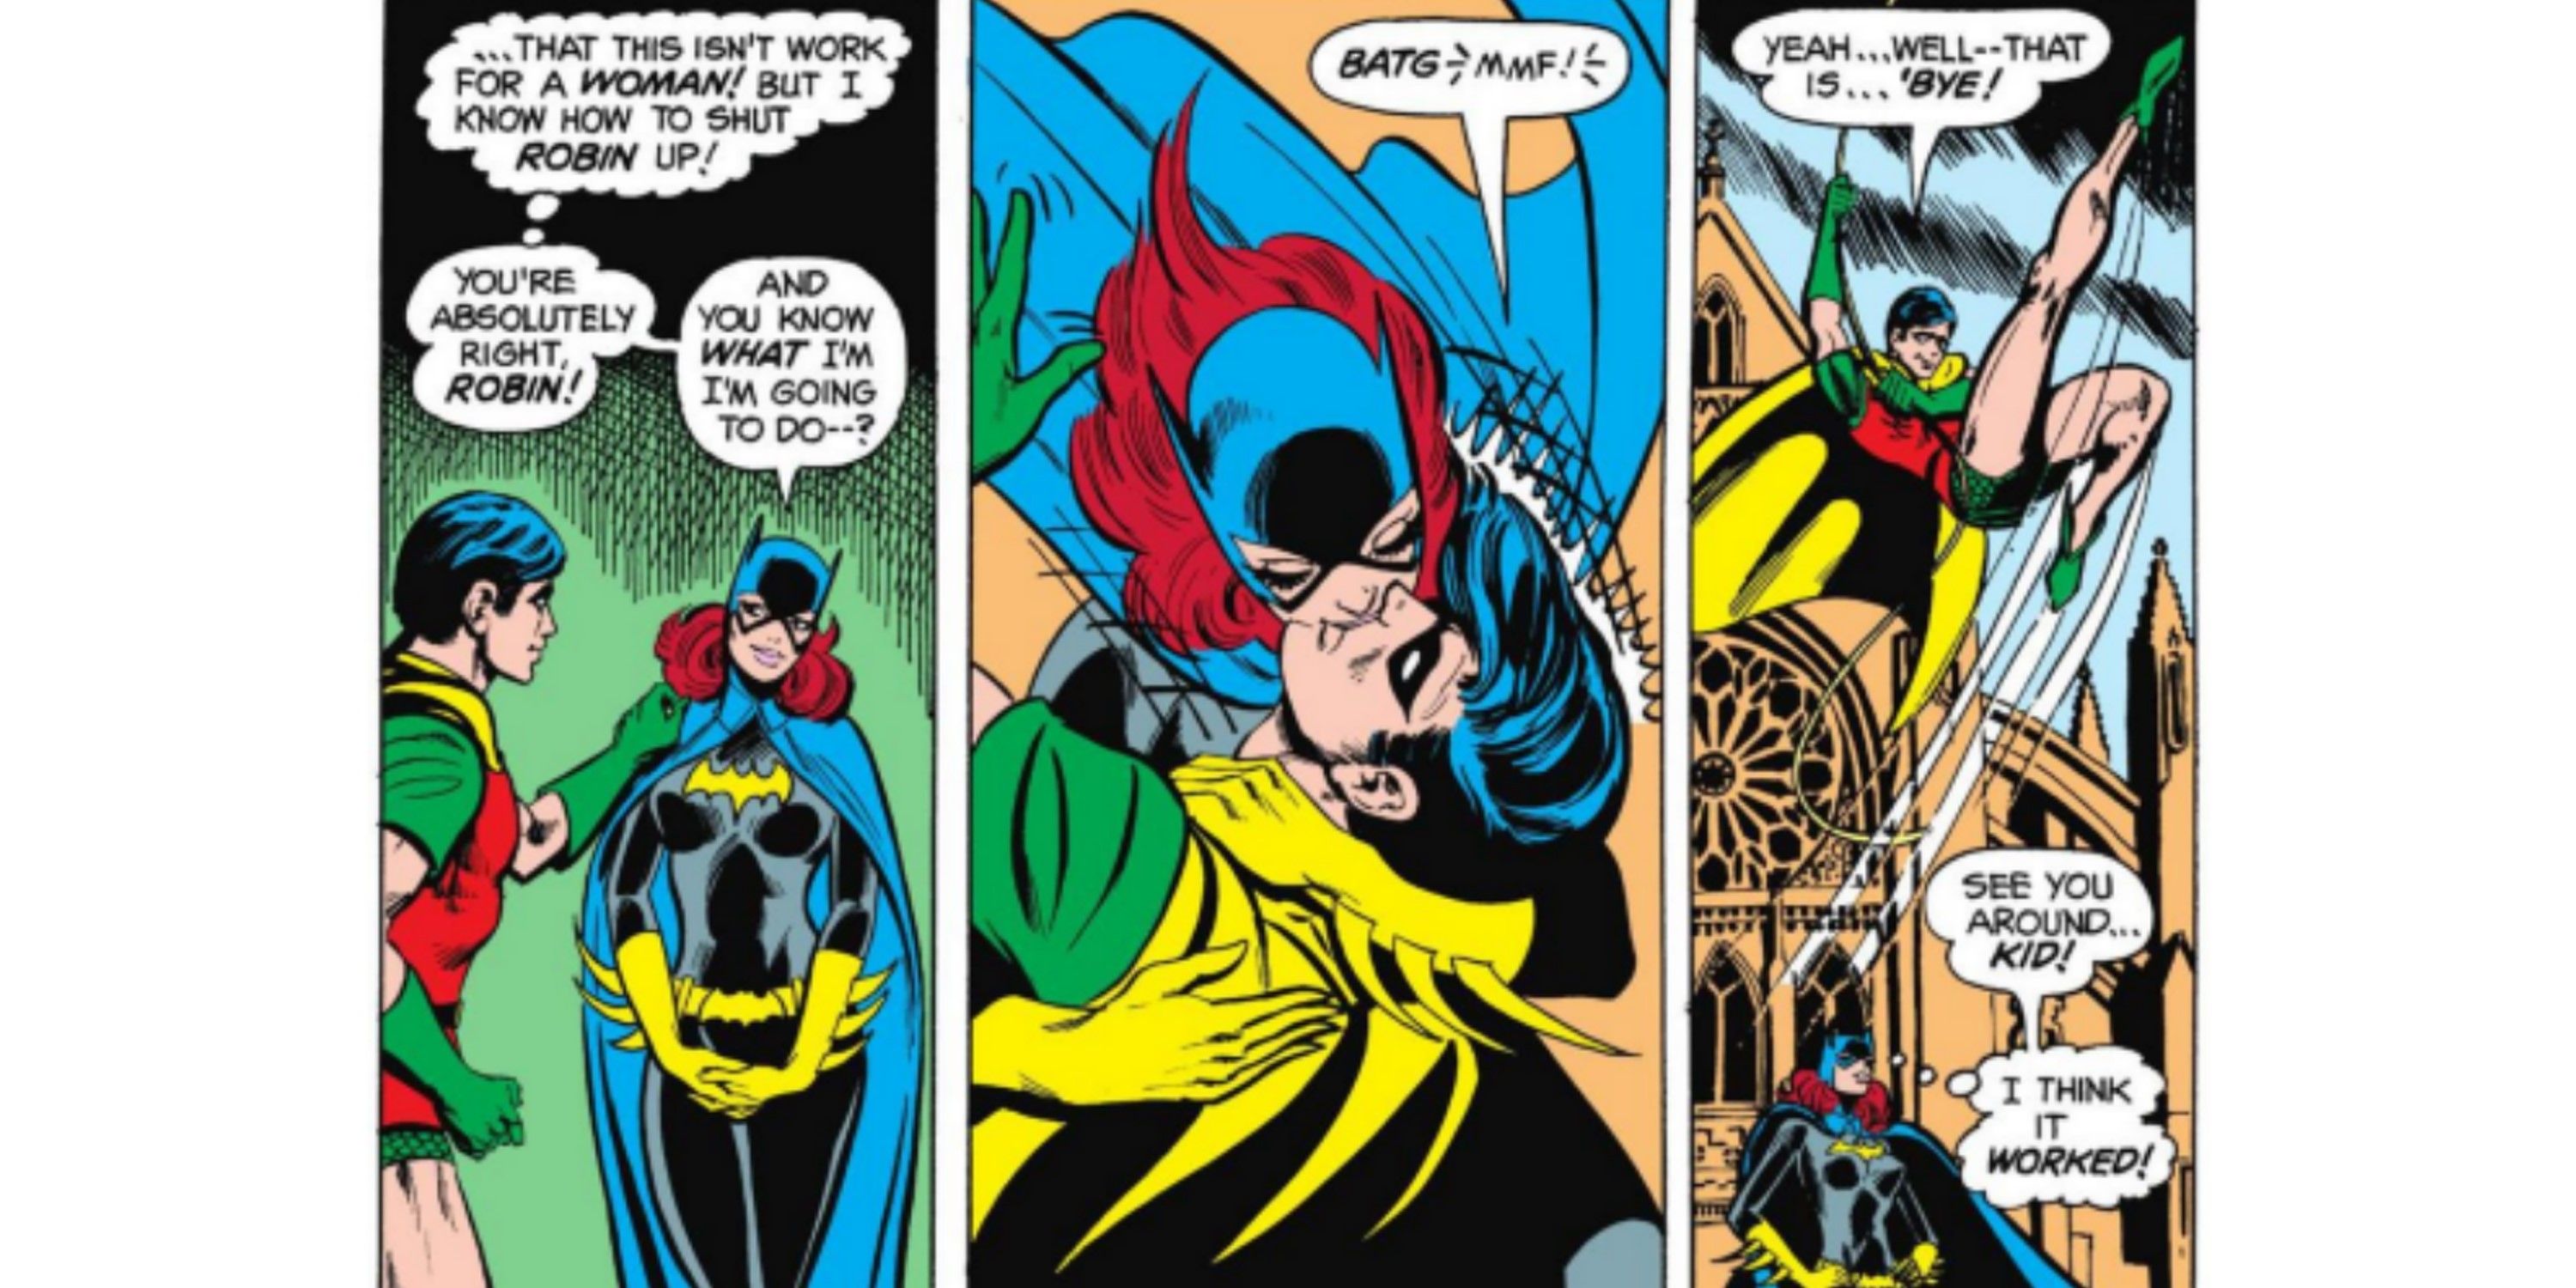 Batgirl kisses Robin to shut him up in DC Comics